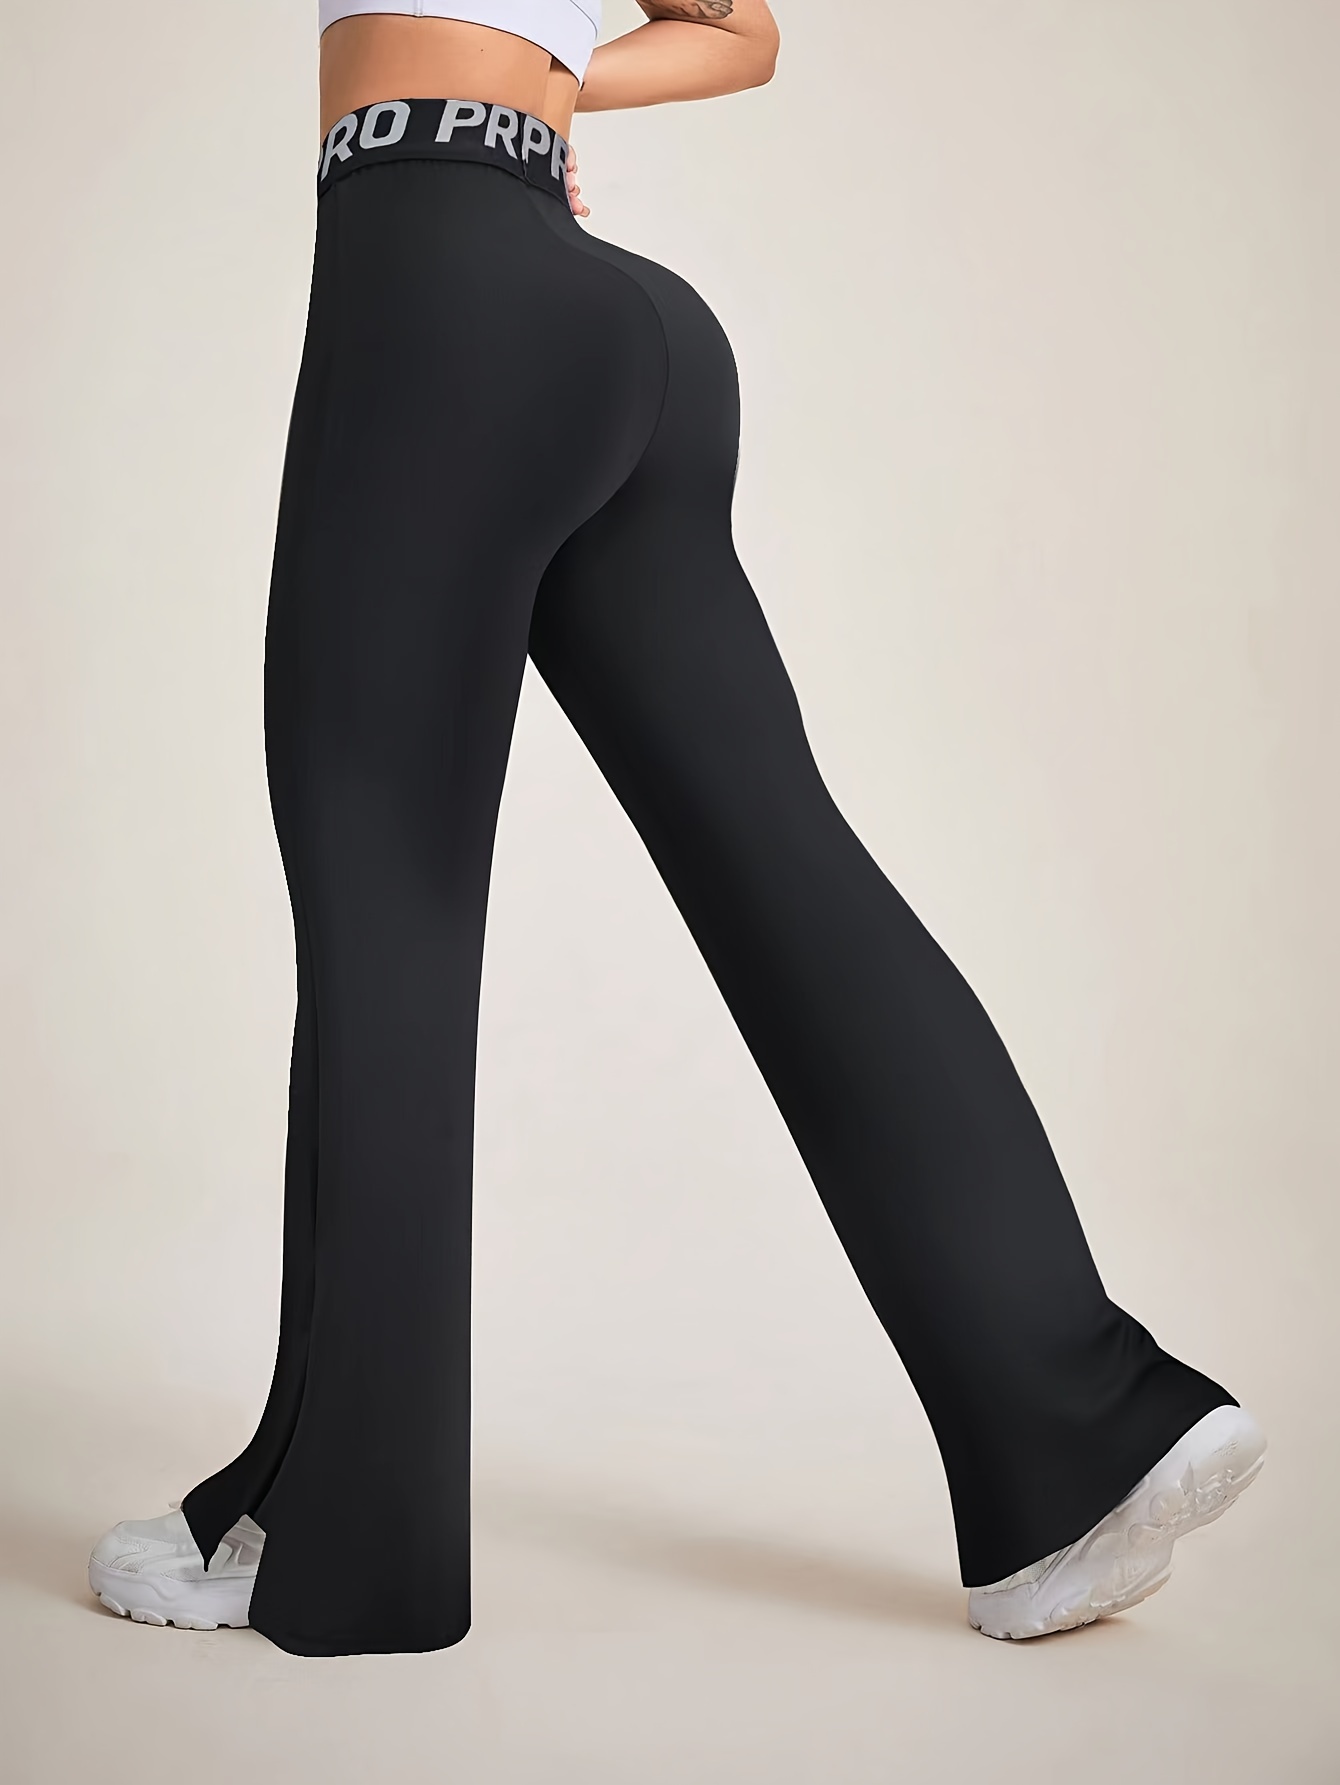 Front Slit Black Leggings Flare Bottom Leggings Split Hem Athletic Pants  Sustainable Activewear Sportswear Pants -  Canada